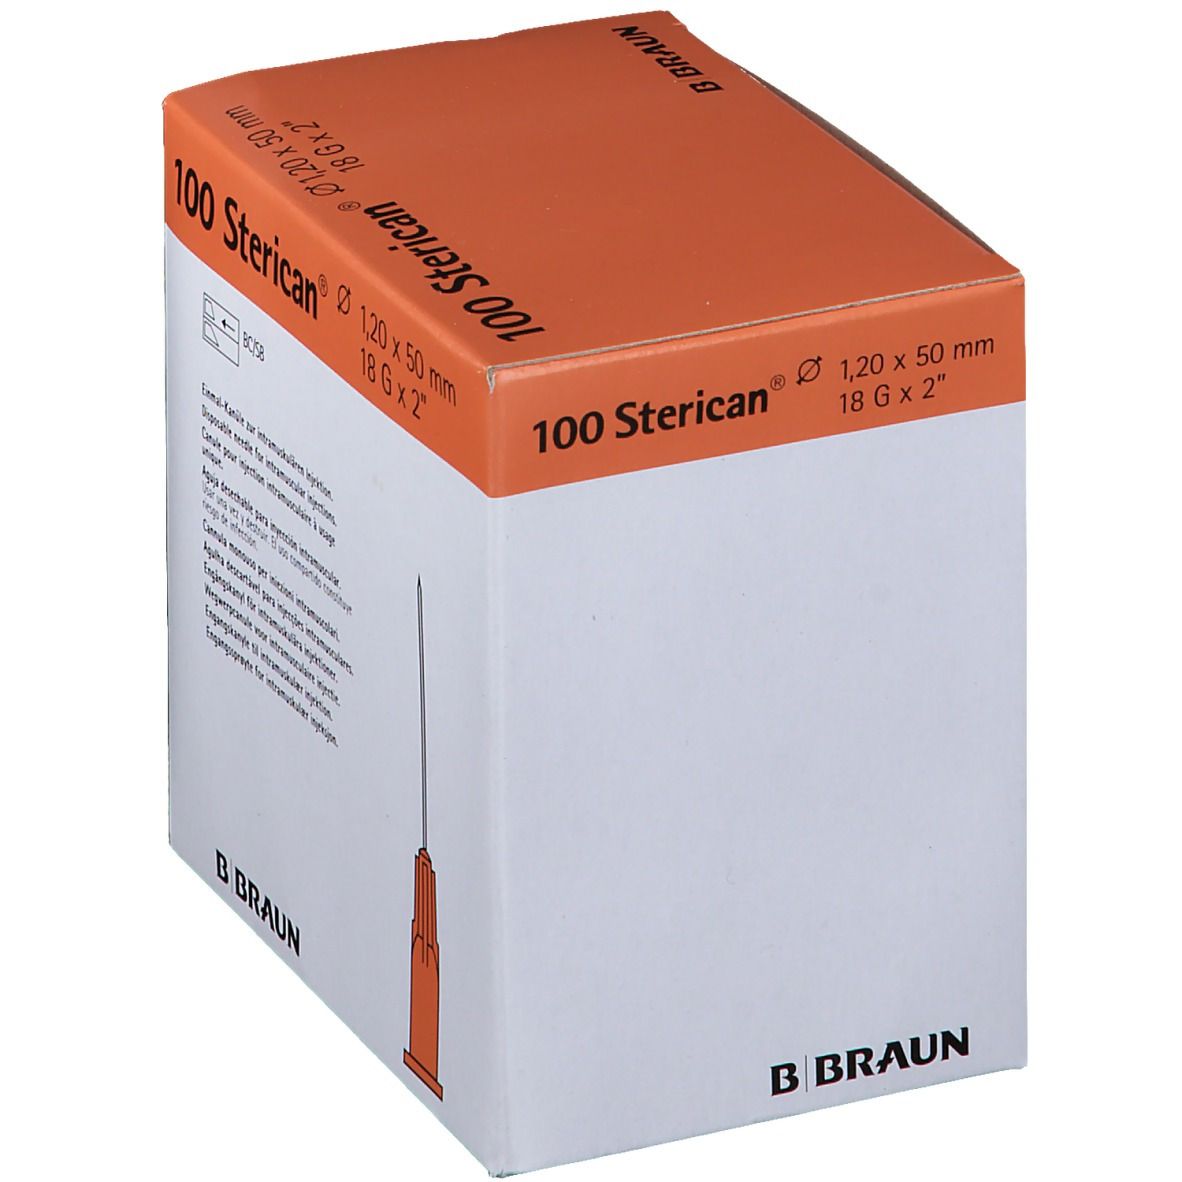 Sterican® Intramuskulär G18 x 2 Zoll 1,2 x 50 mm rosa